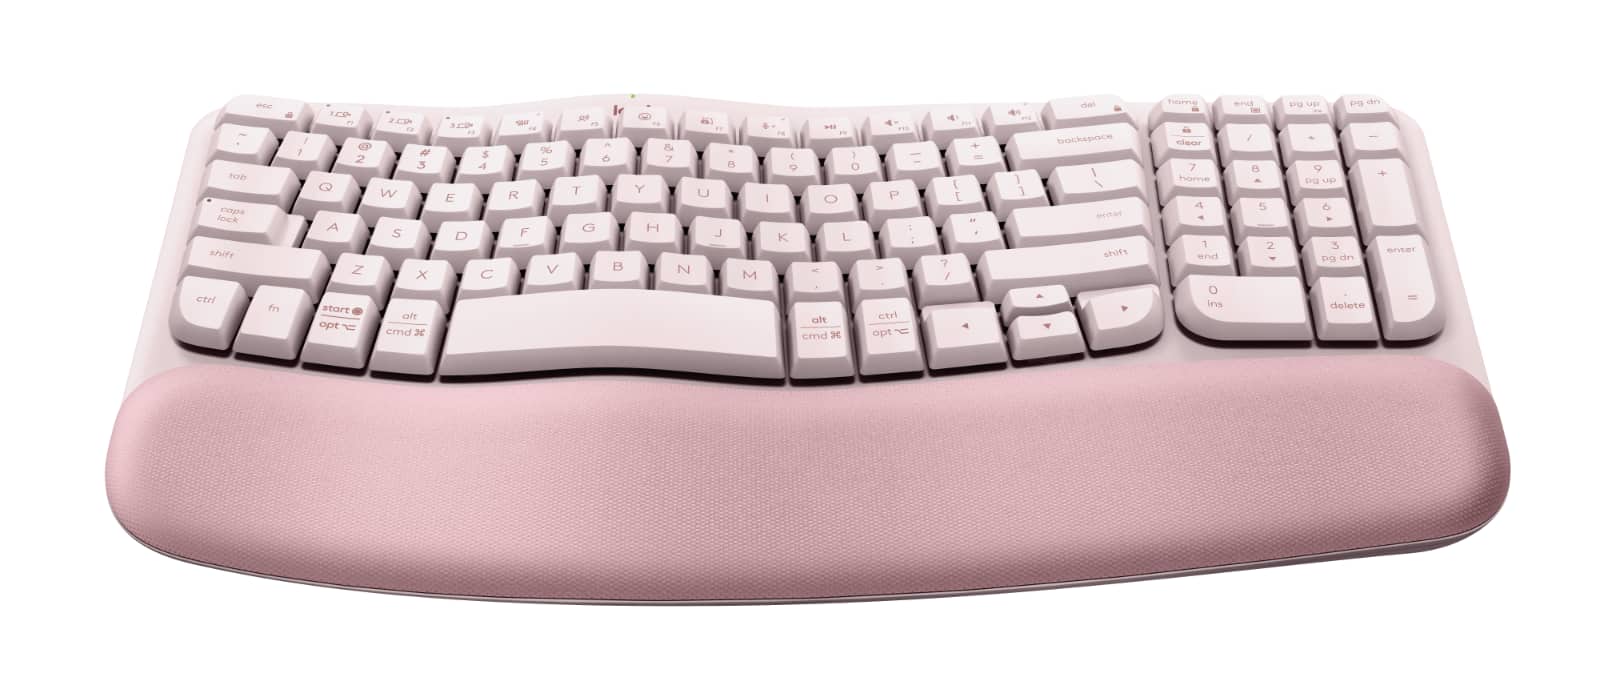 Logitech Wave Keys for Business, Wireless Ergonomic Keyboard with